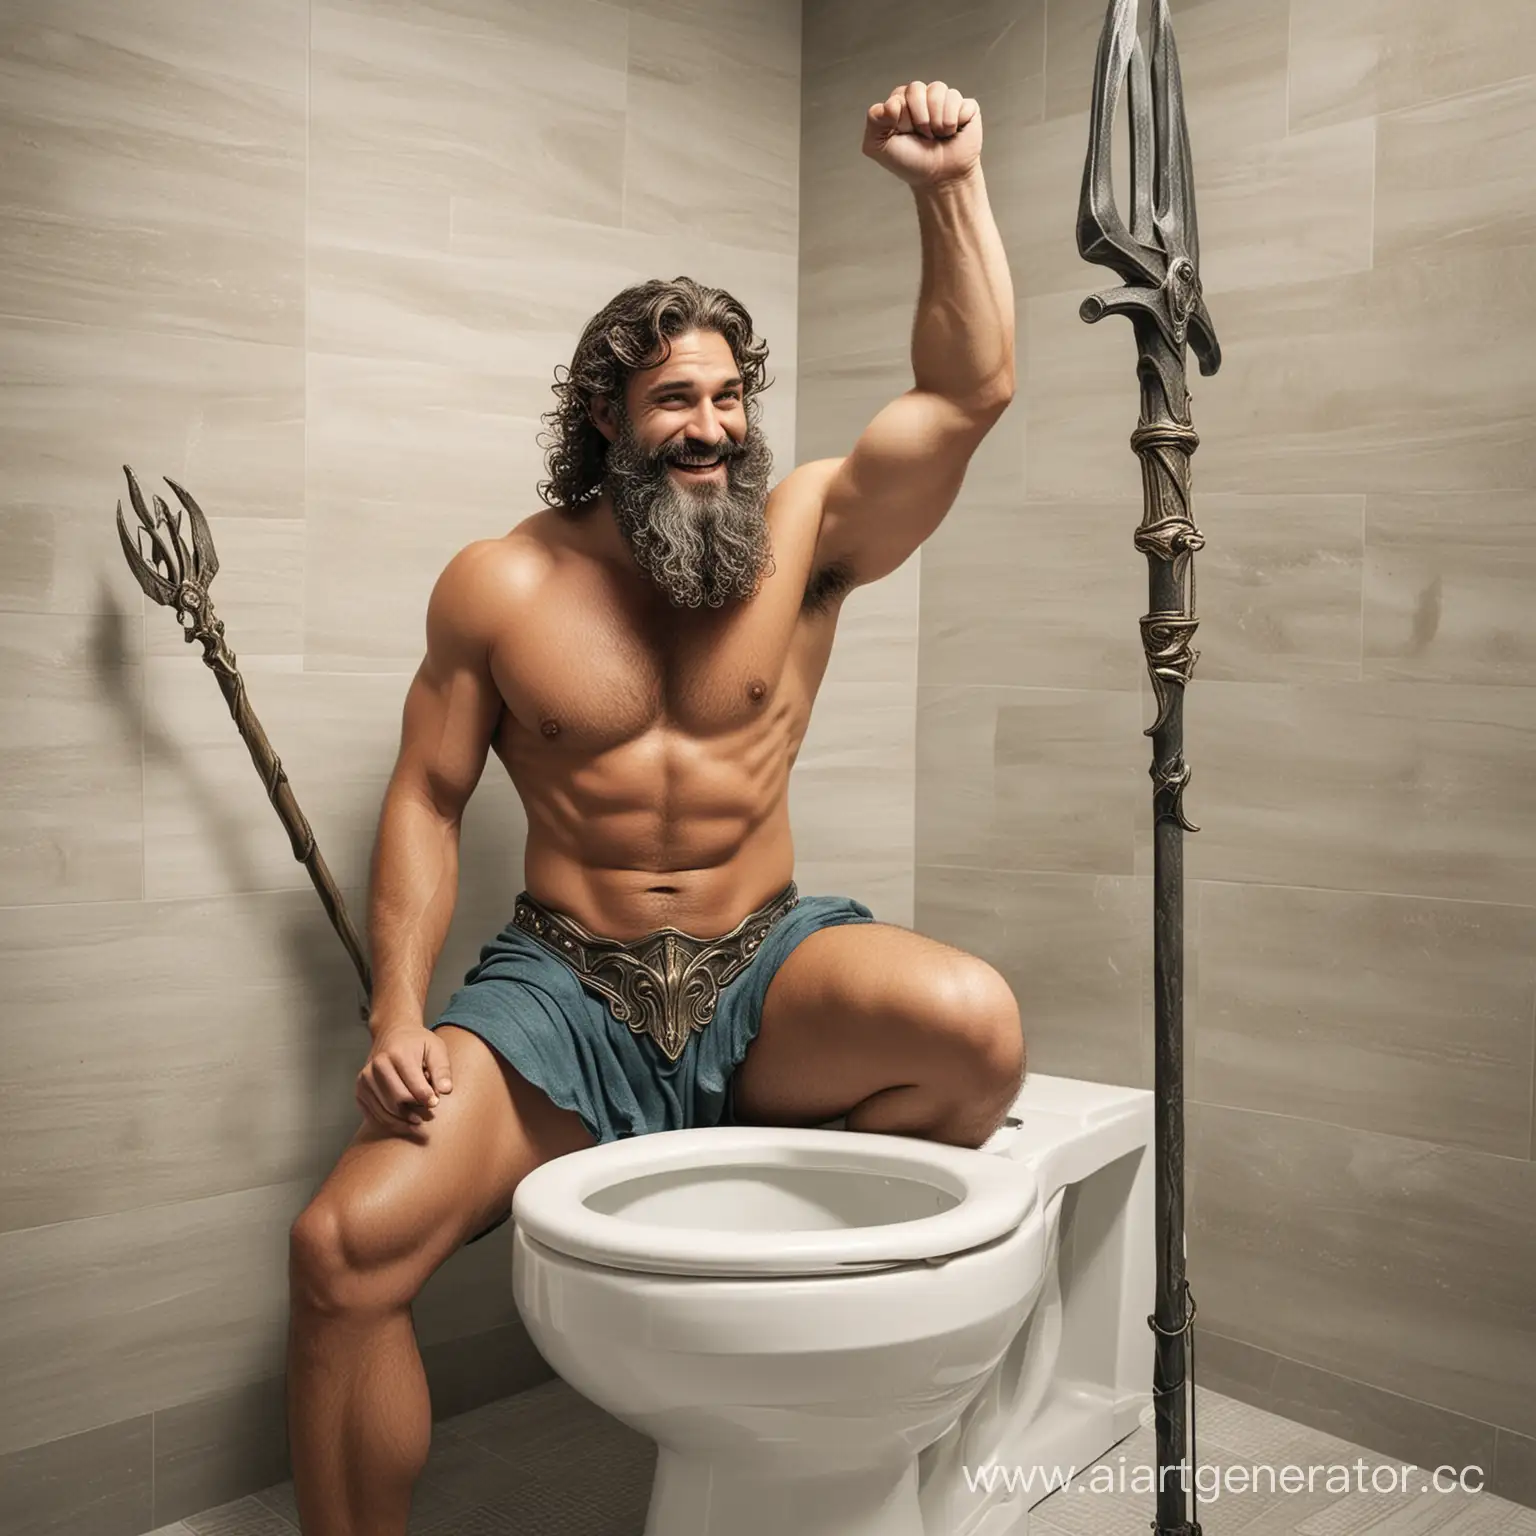 Poseidon-Smirking-by-the-Toilet-with-Trident